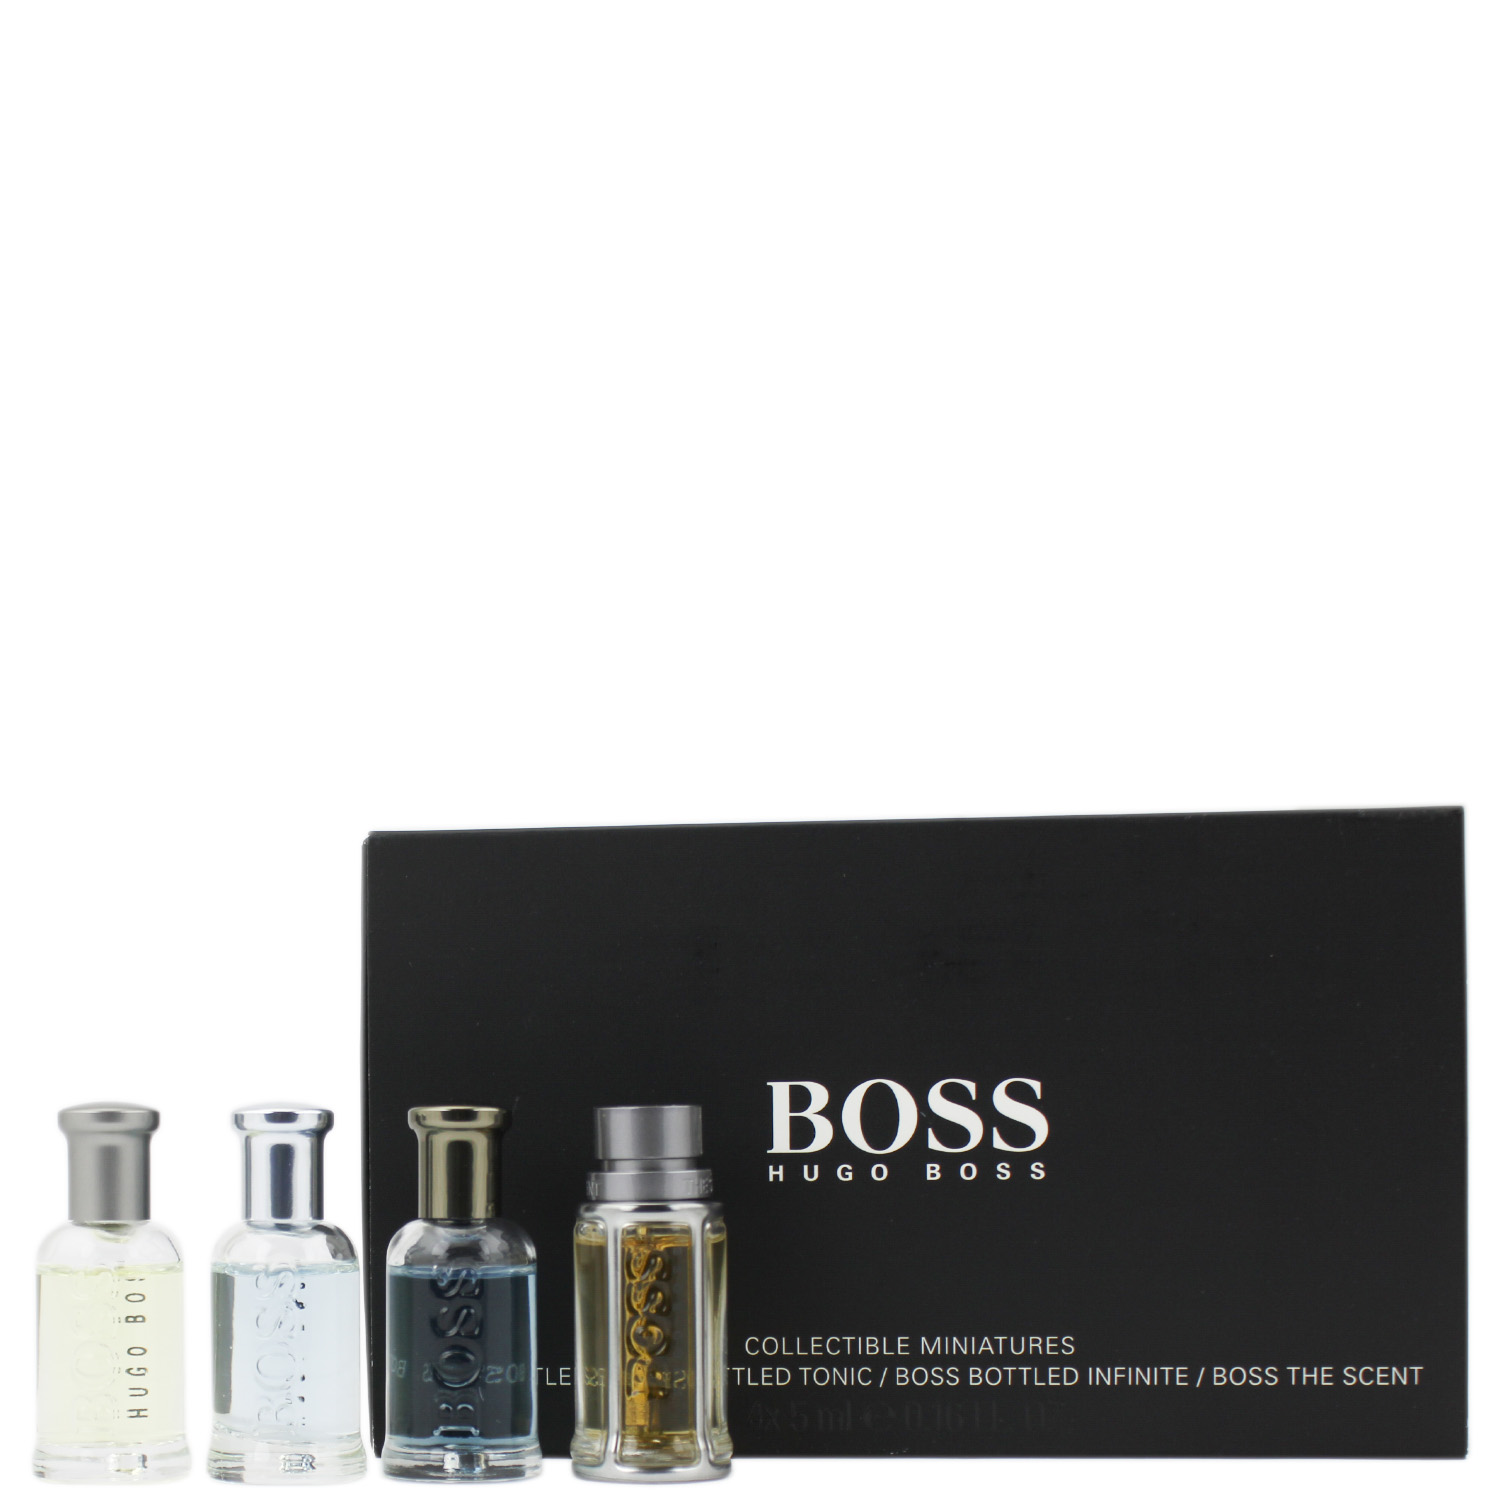 Hugo Boss Collectible Miniatur Set for Men 4 x 5ml